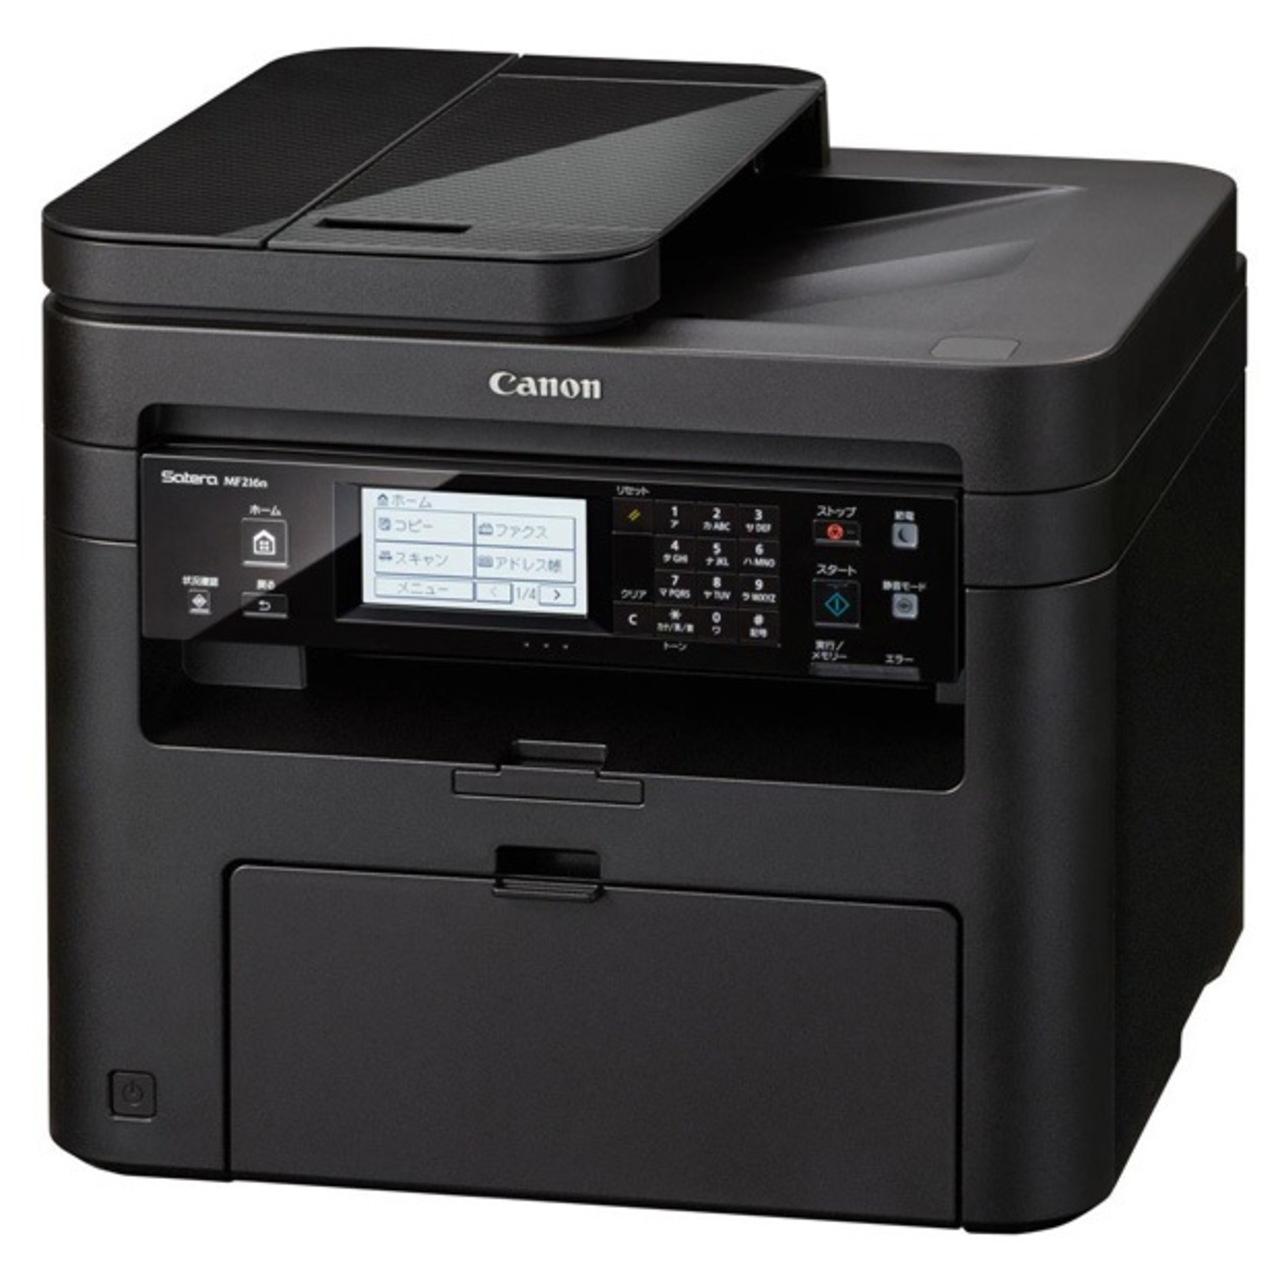 Canon Imageclass Mf216n All In One Laser Printer Refurbished printers Com